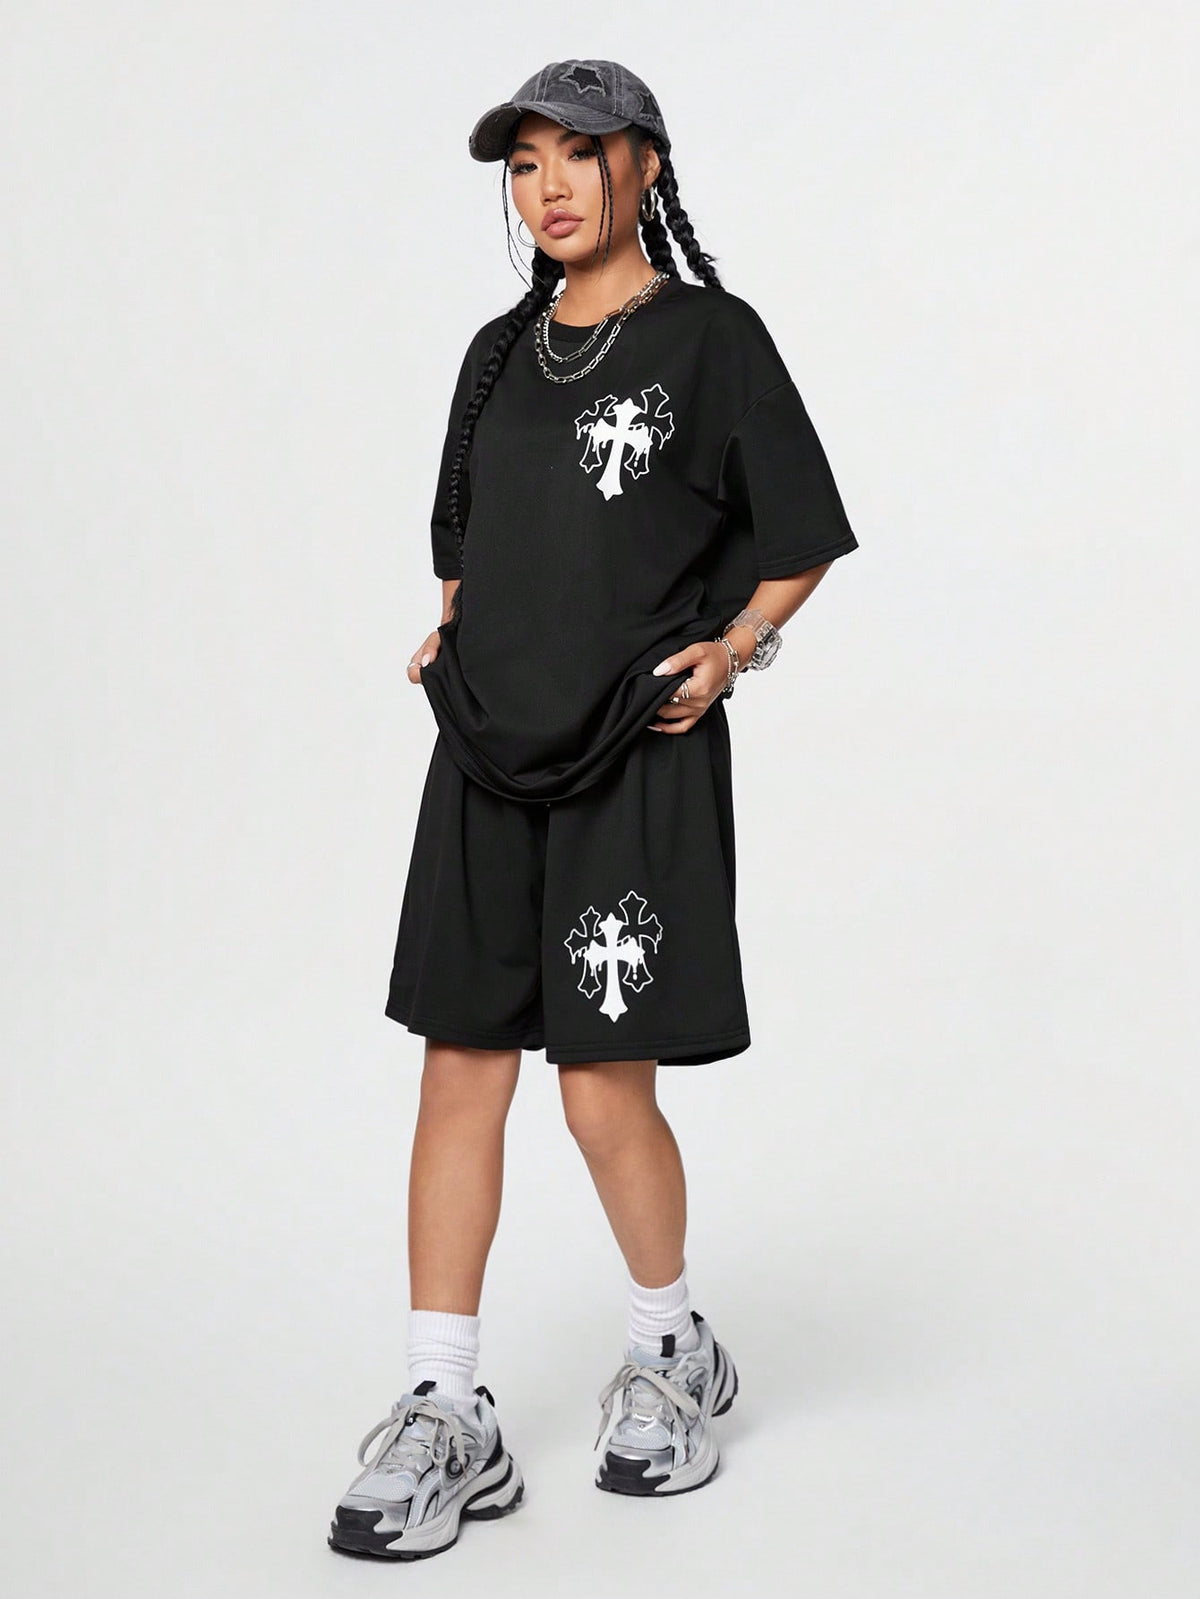 Women's Cross Printed Round Neck T-Shirt And Shorts Set